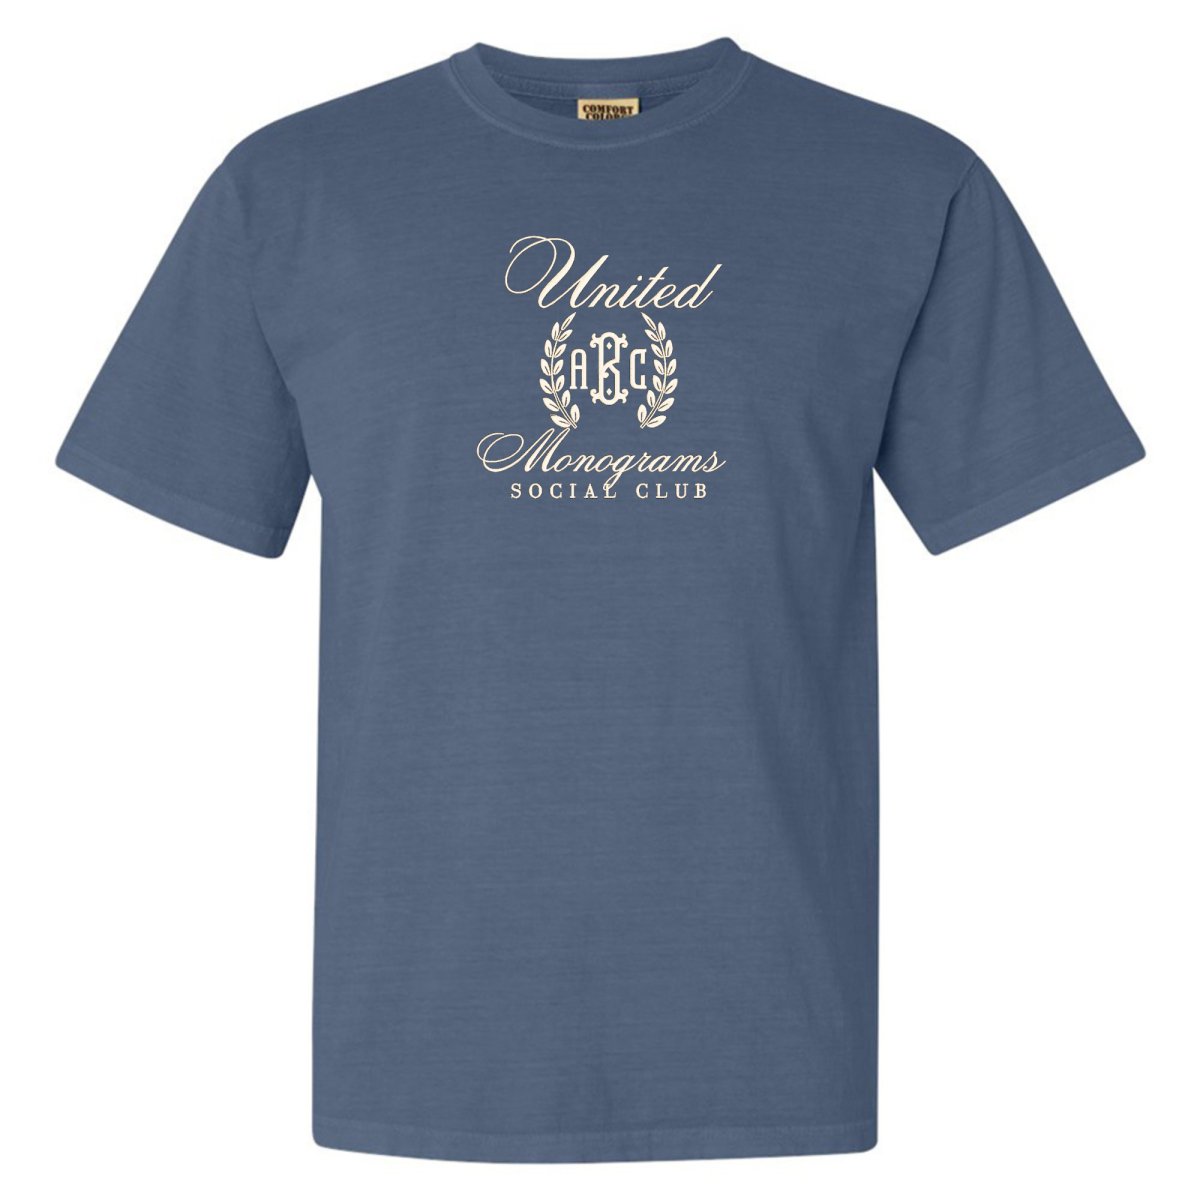 Monogrammed 'UM Social Club' Embroidered T-Shirt - United Monograms